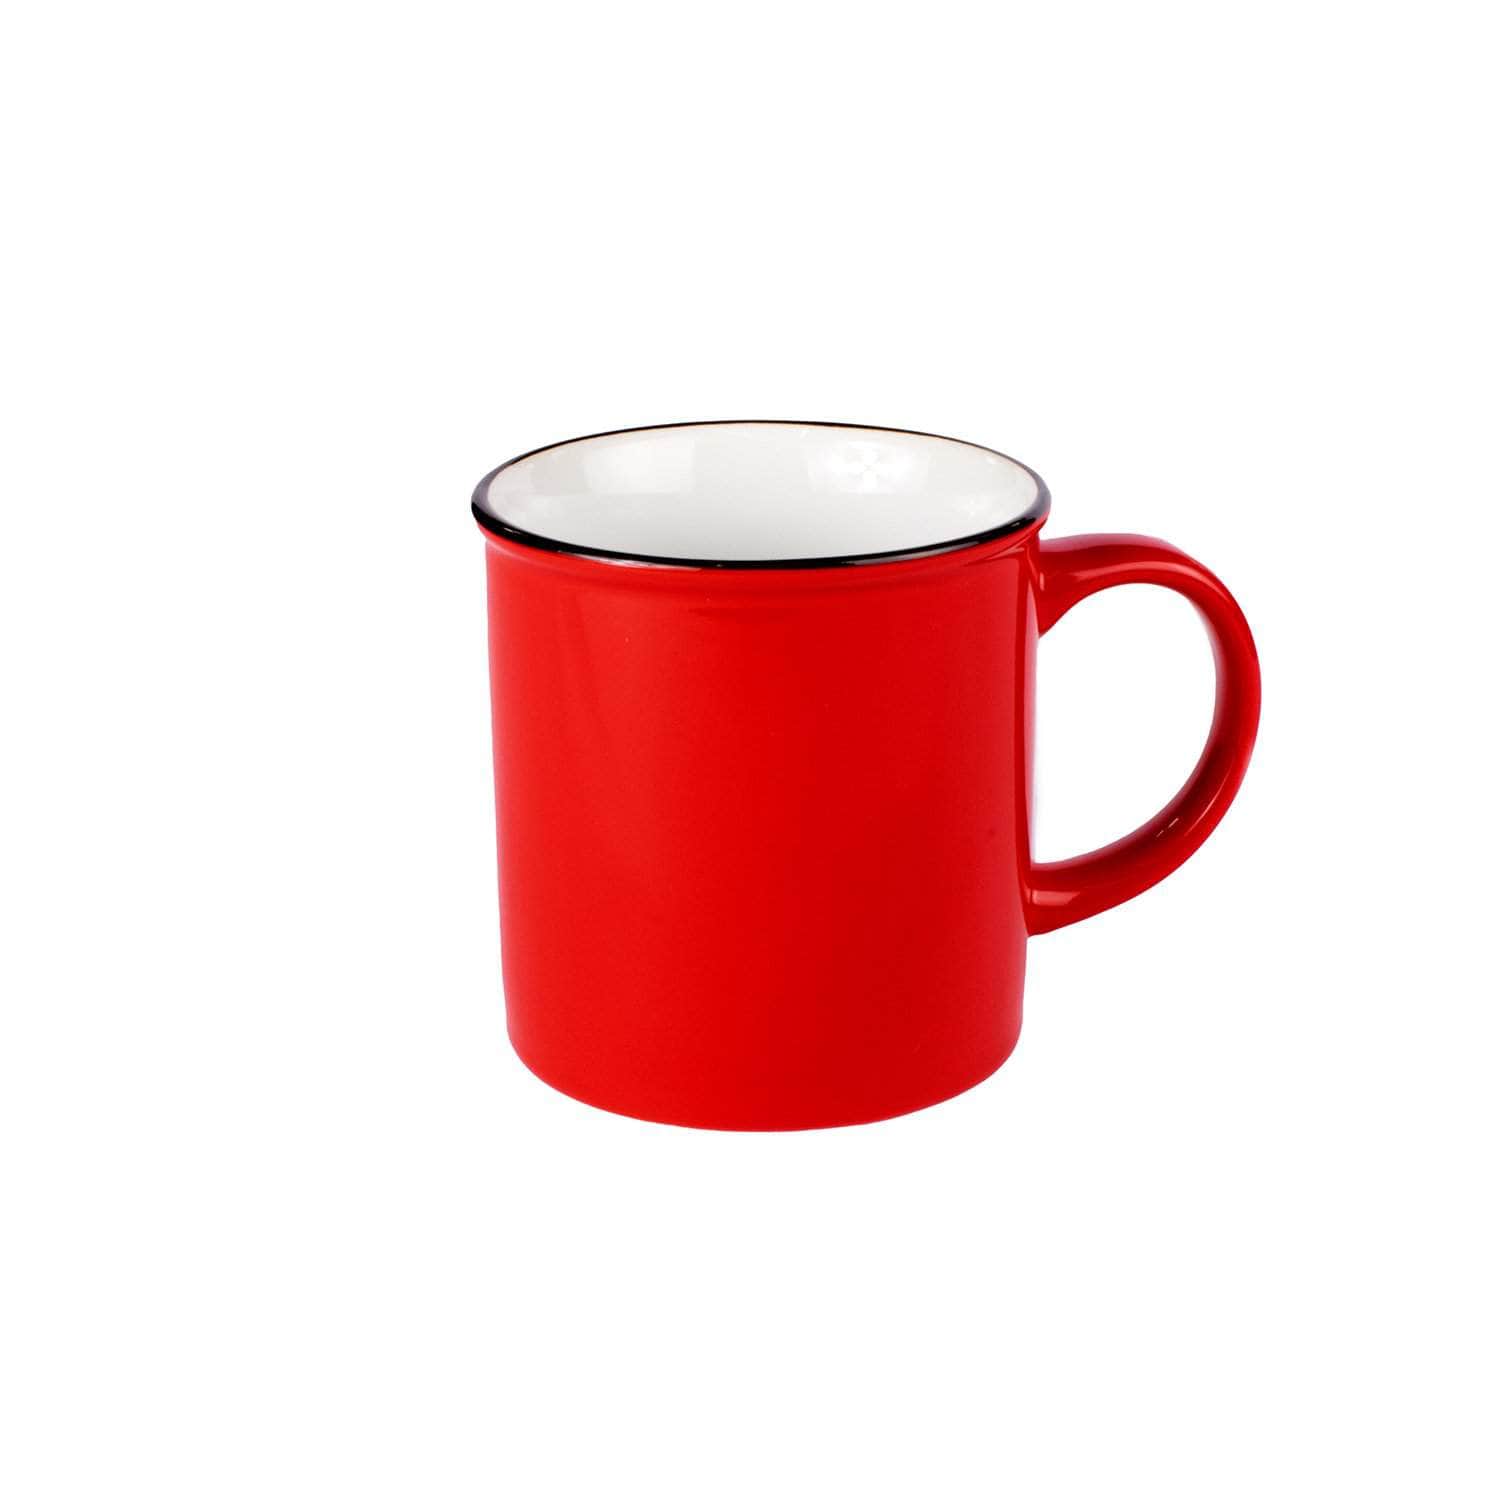 *New* Red ceramic Tea/Coffee mug